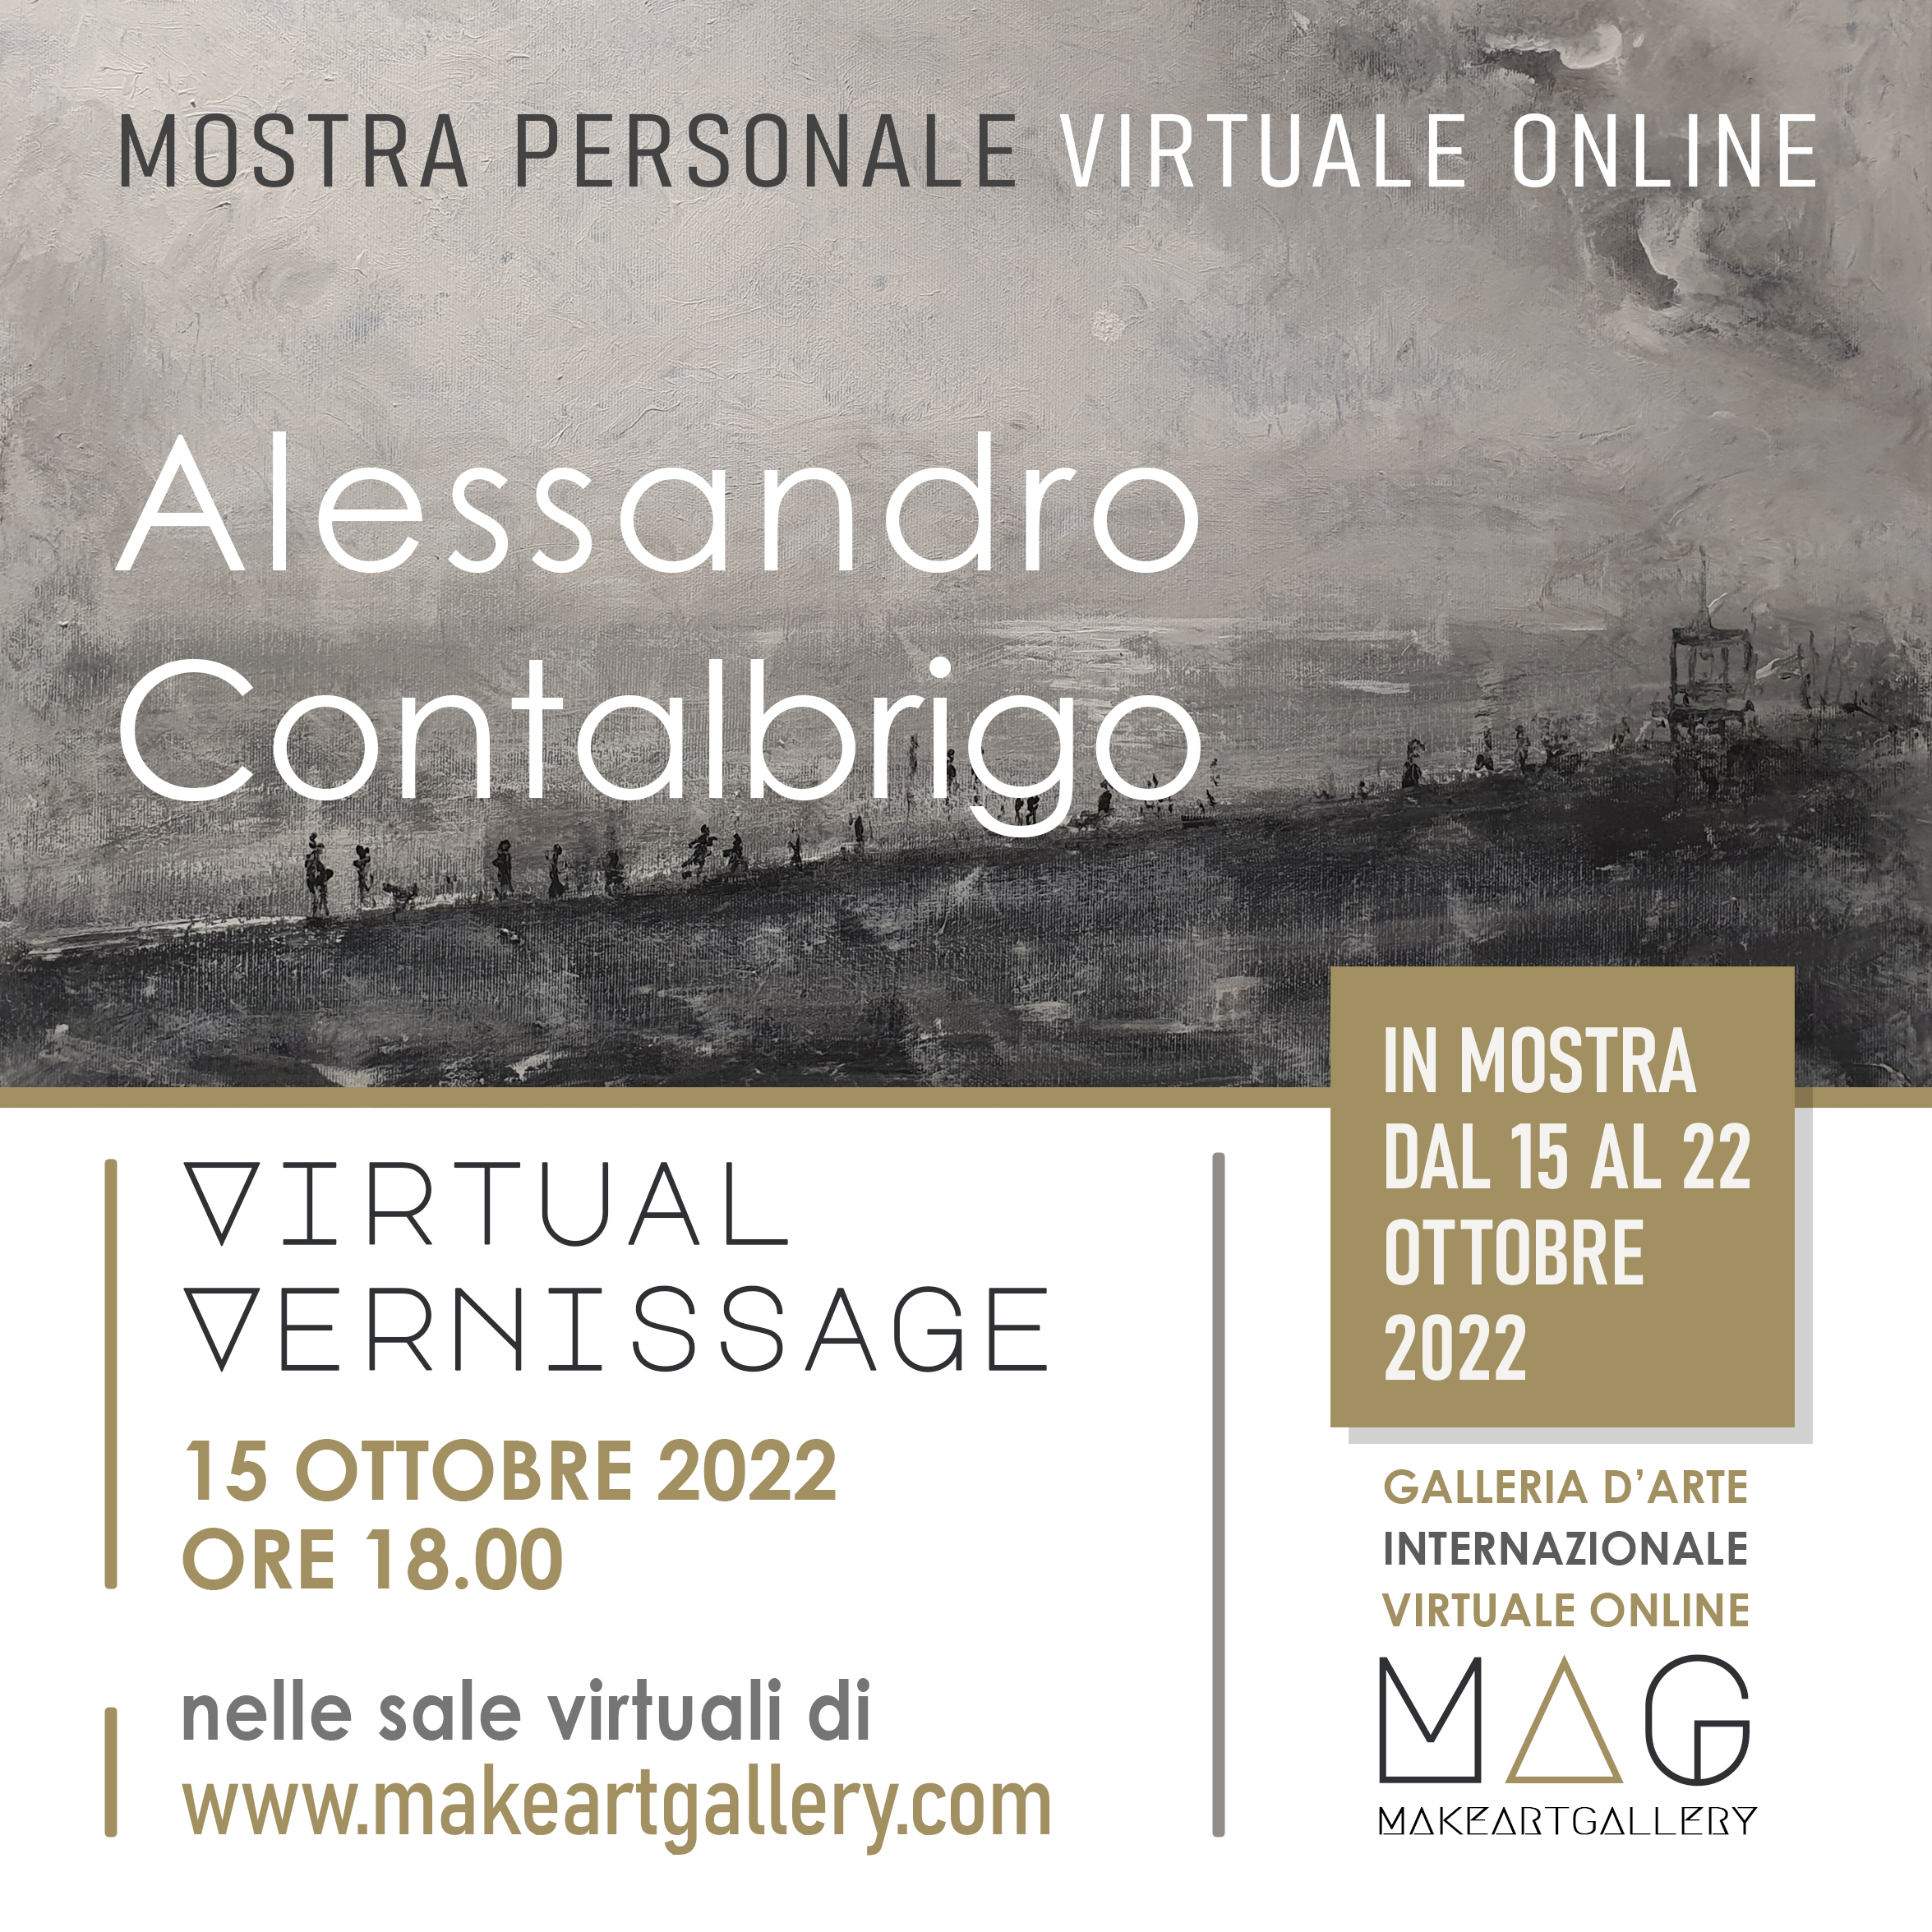 Alessandro Contalbrigo artista - Mostra personale virtuale online